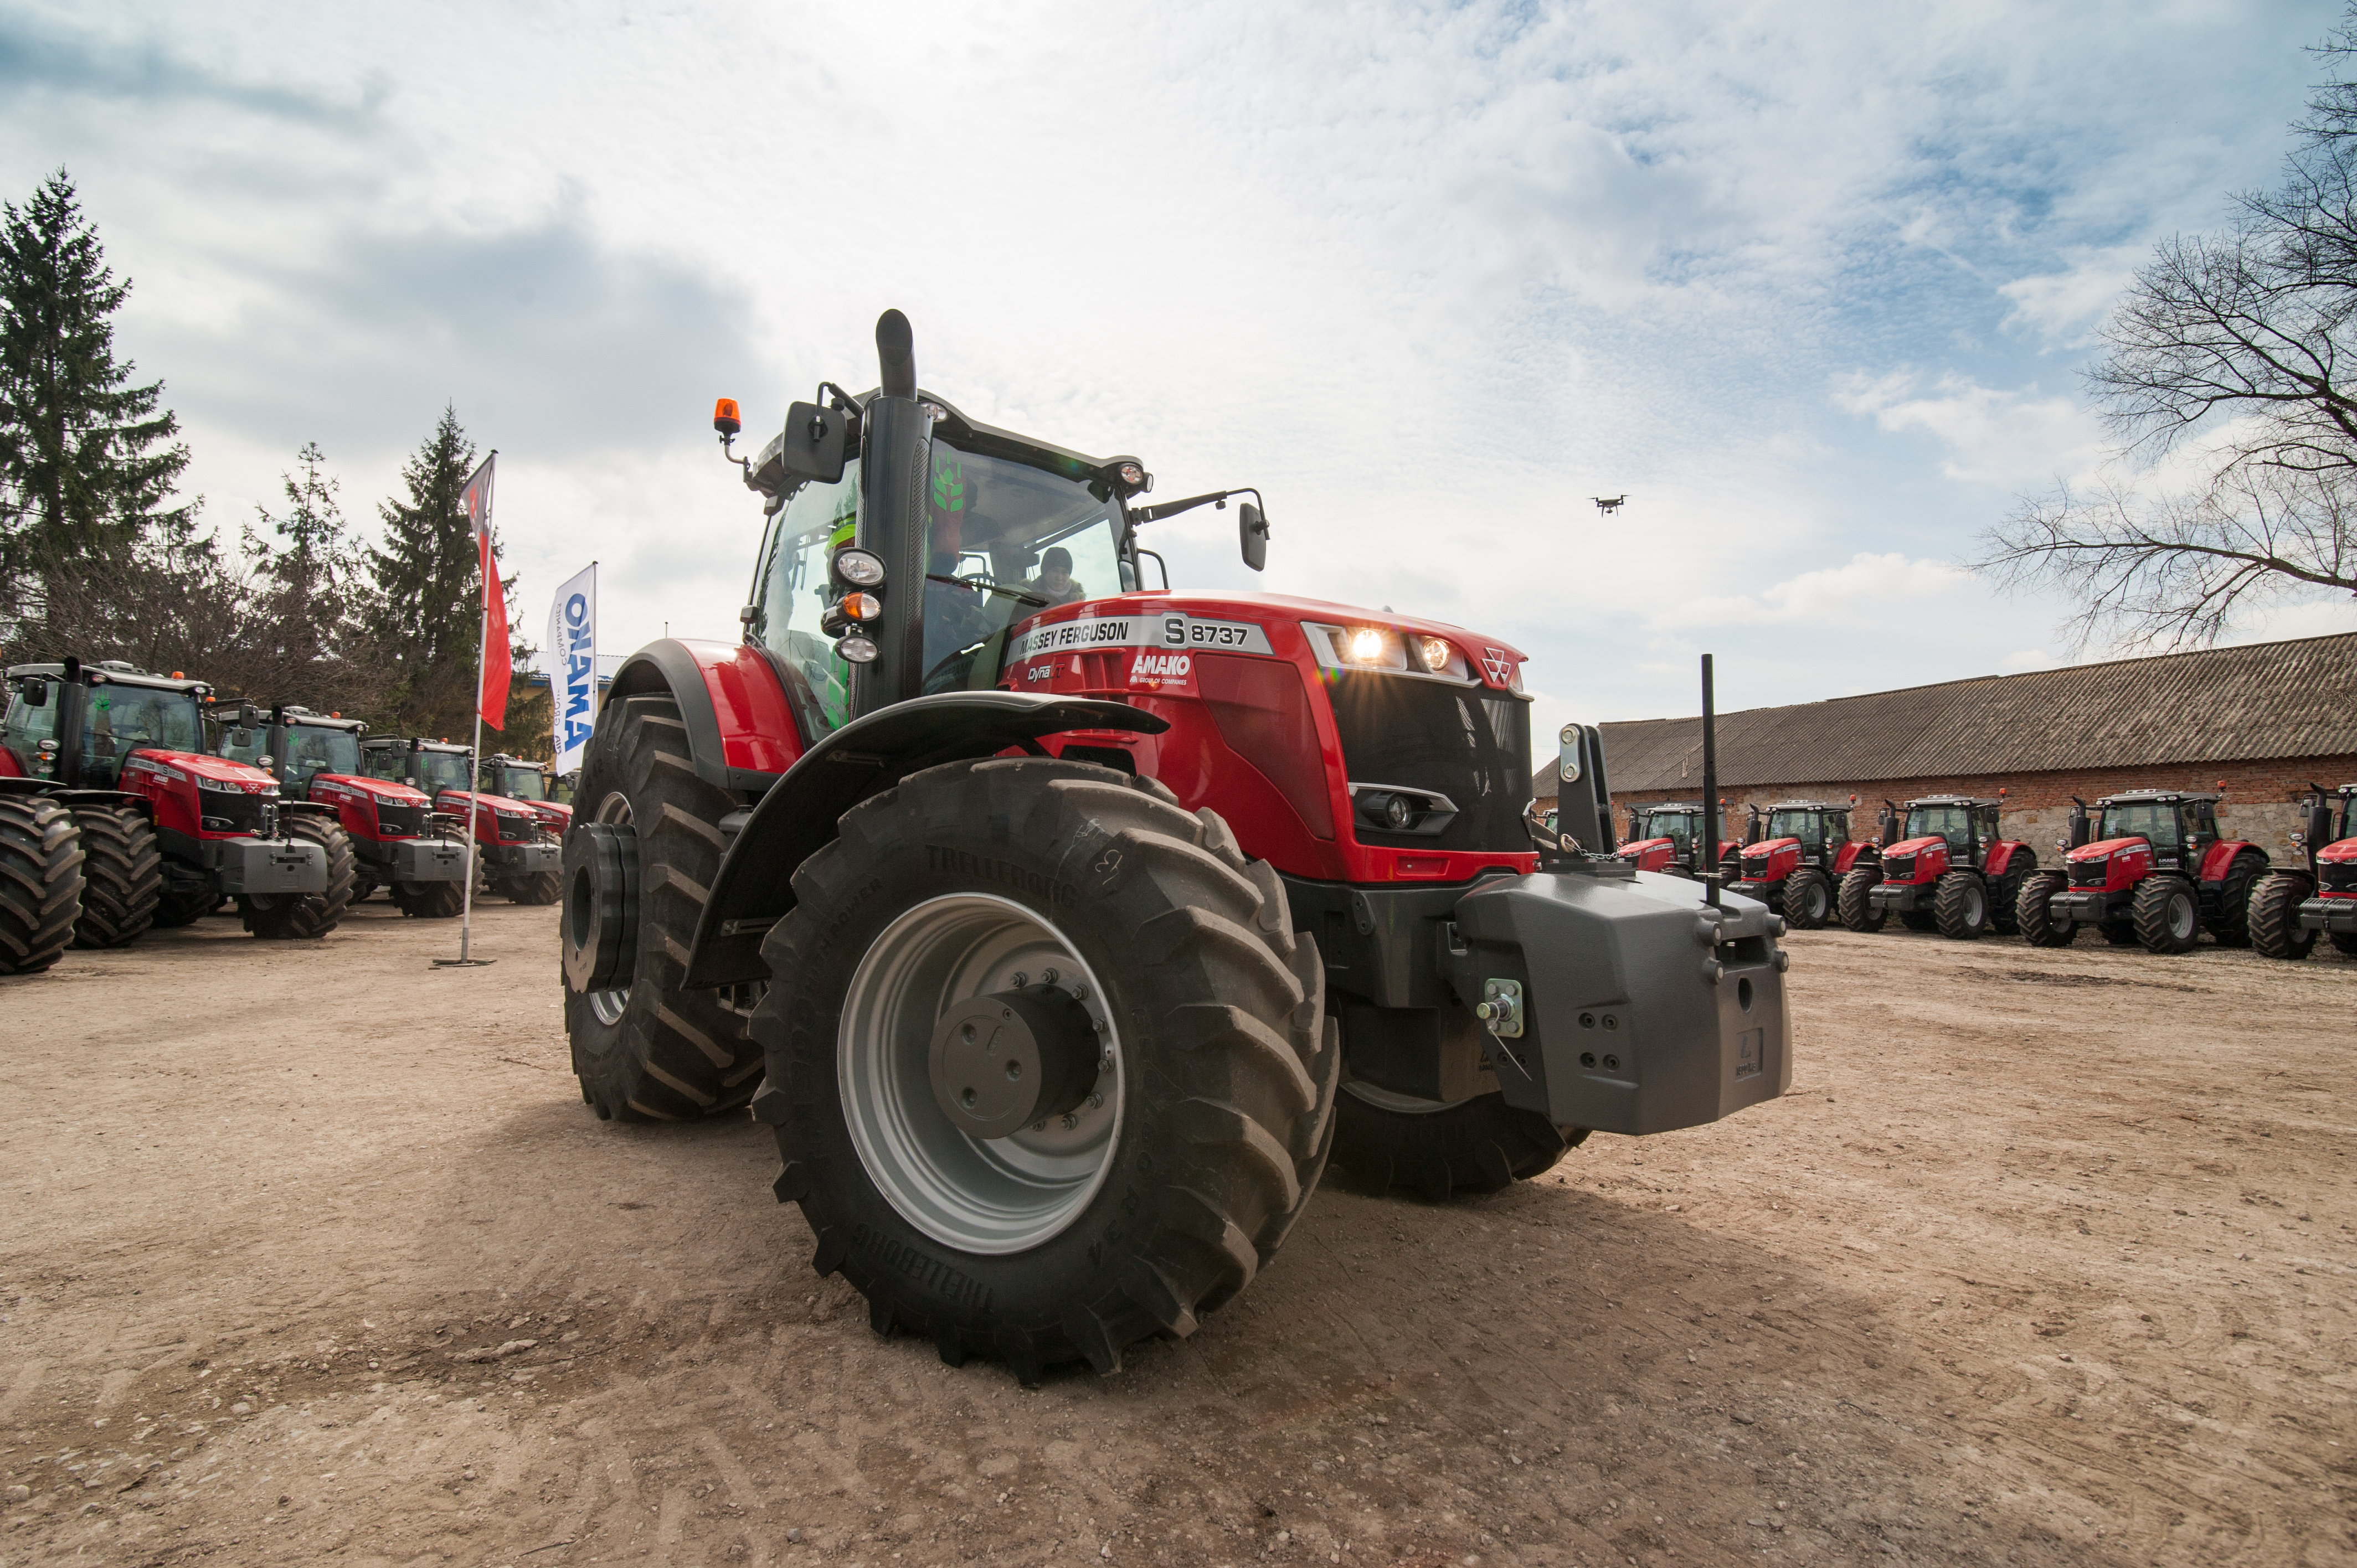 CMNP leiloa veículos, máquinas e implementos agrícolas no Superbid Marketplace!